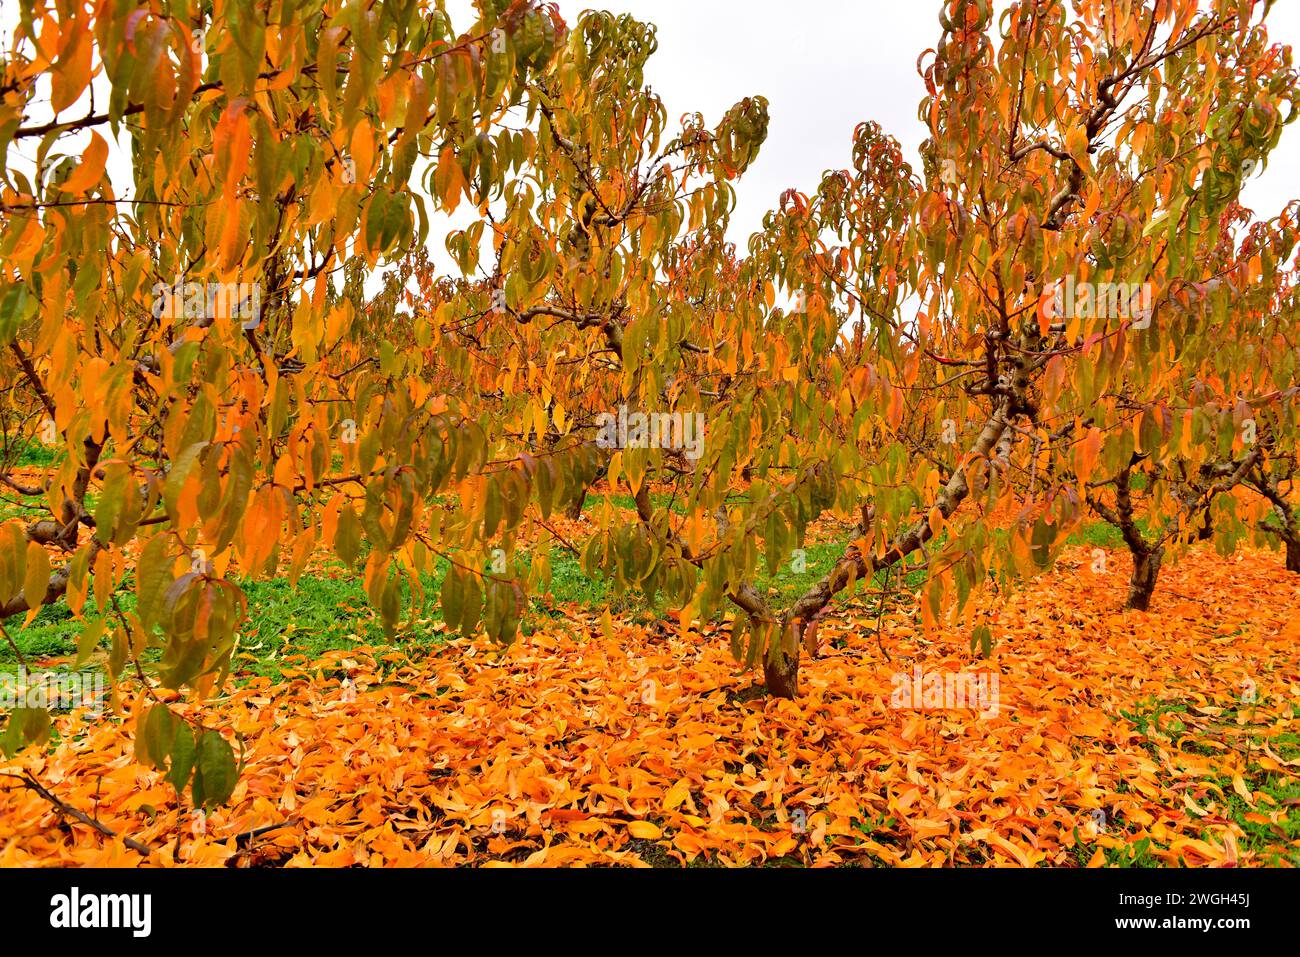 Peach field (Prunus persica) in autumn. This photo was taken in Torres de Segre, Lleida province, Catalonia, Spain. Stock Photo